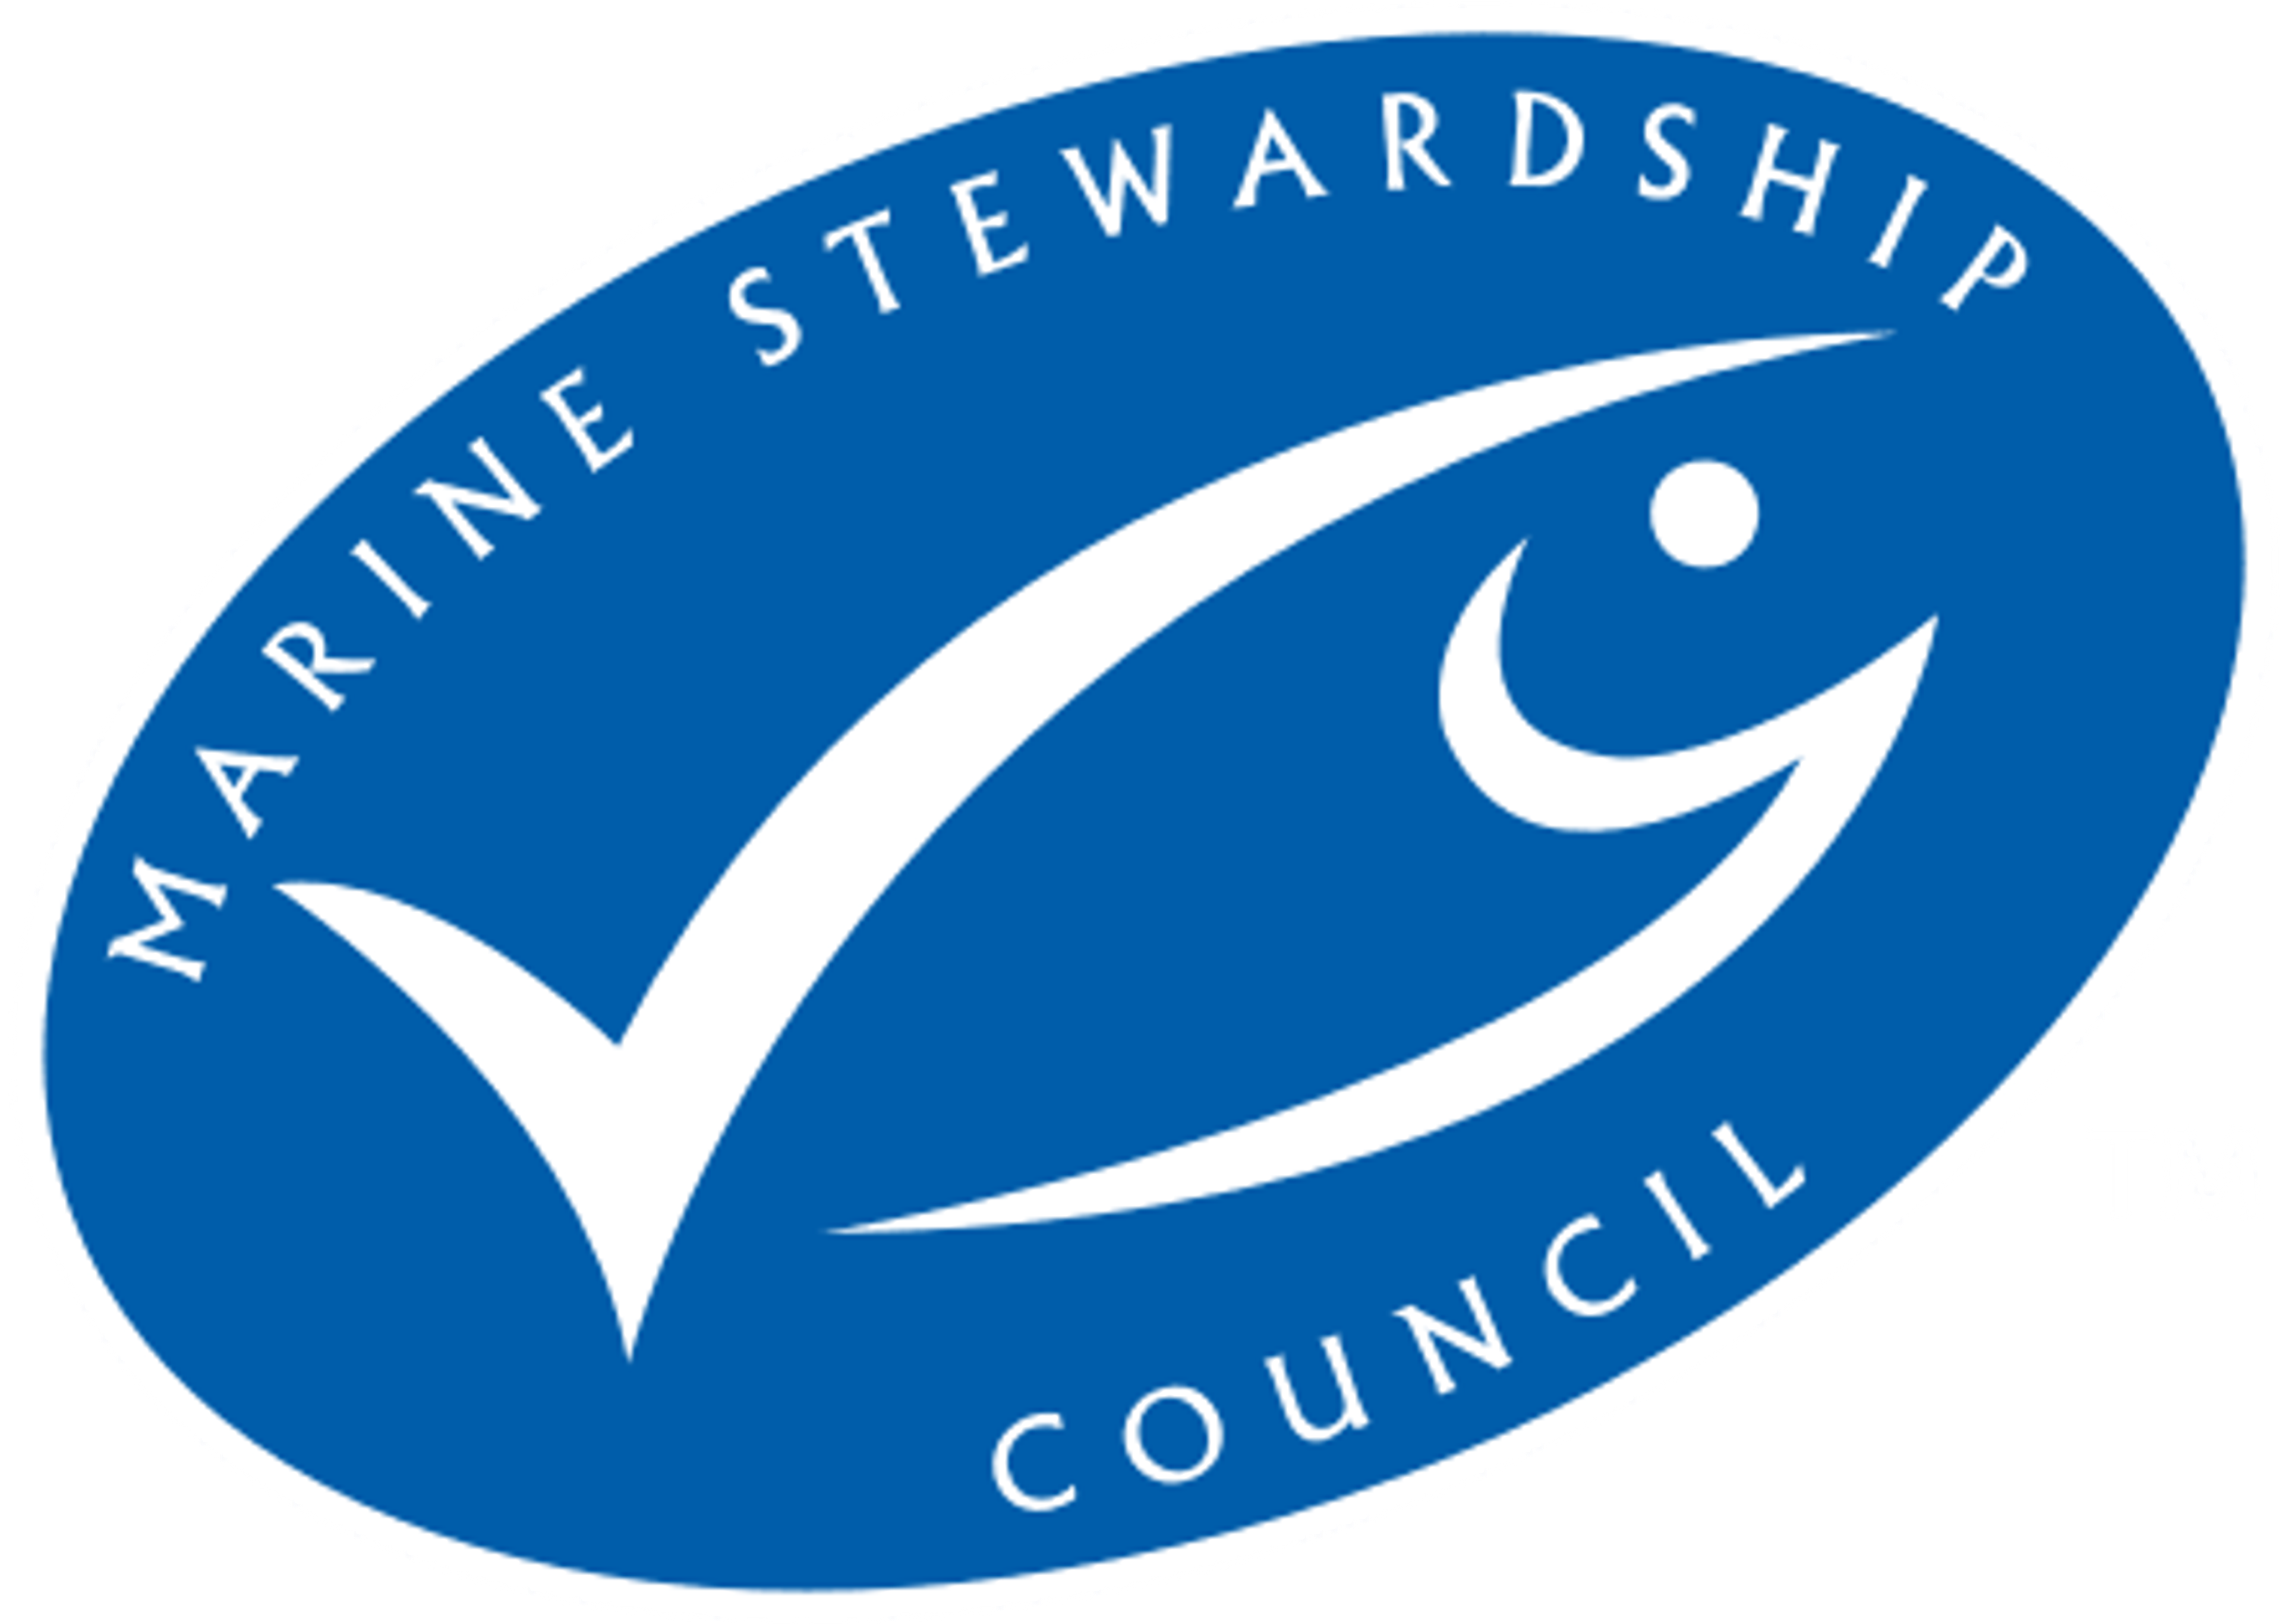 Marine Stewardship Council logo.